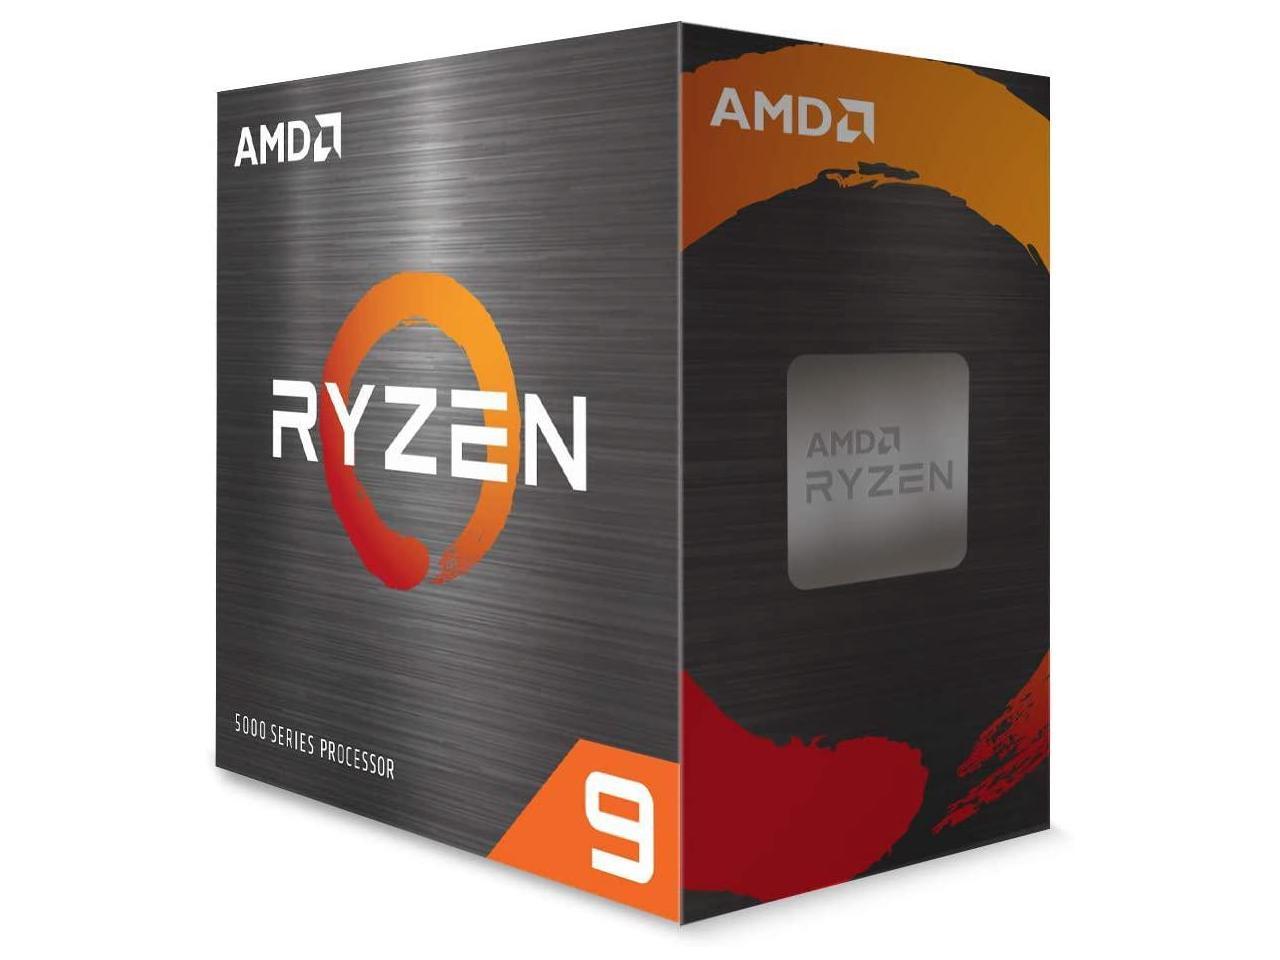 No RAM Bundle Gigabyte B450 AORUS M Motherboard AMD Ryzen 3 2300X Quad Core 4.0GHz CPU